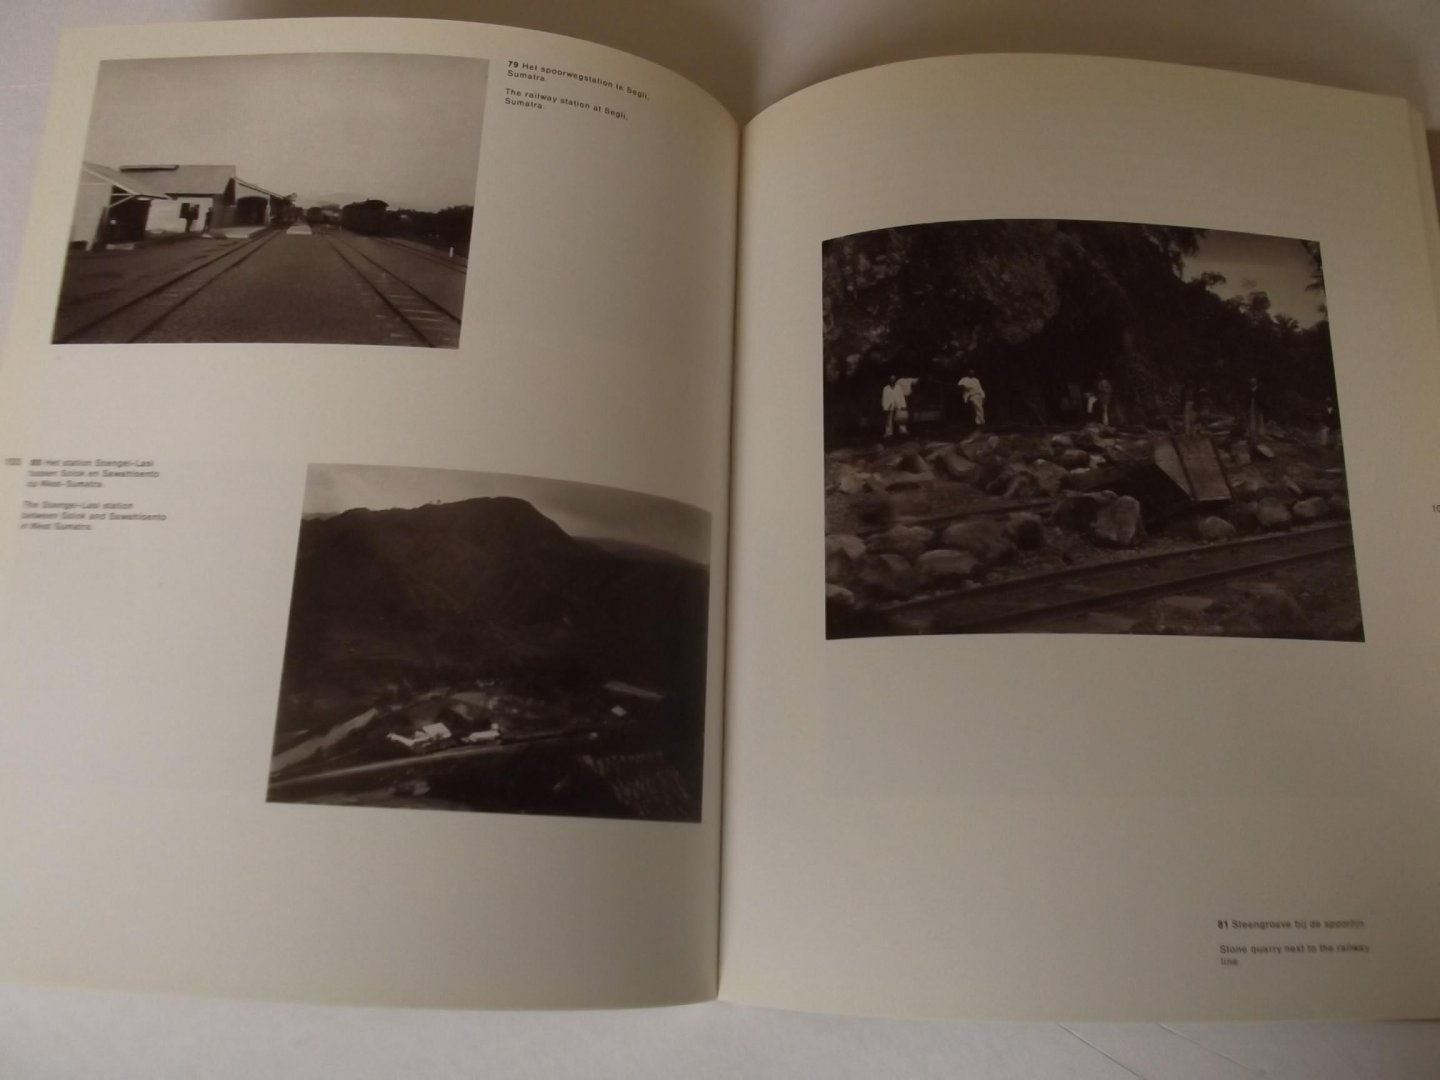 GROENEVELD, A. - Toekan Potret 100 Jaar fotografie in Nederlands Indië 1839-1939 / 100 years of photography in The Dutch Indies 1839-1939